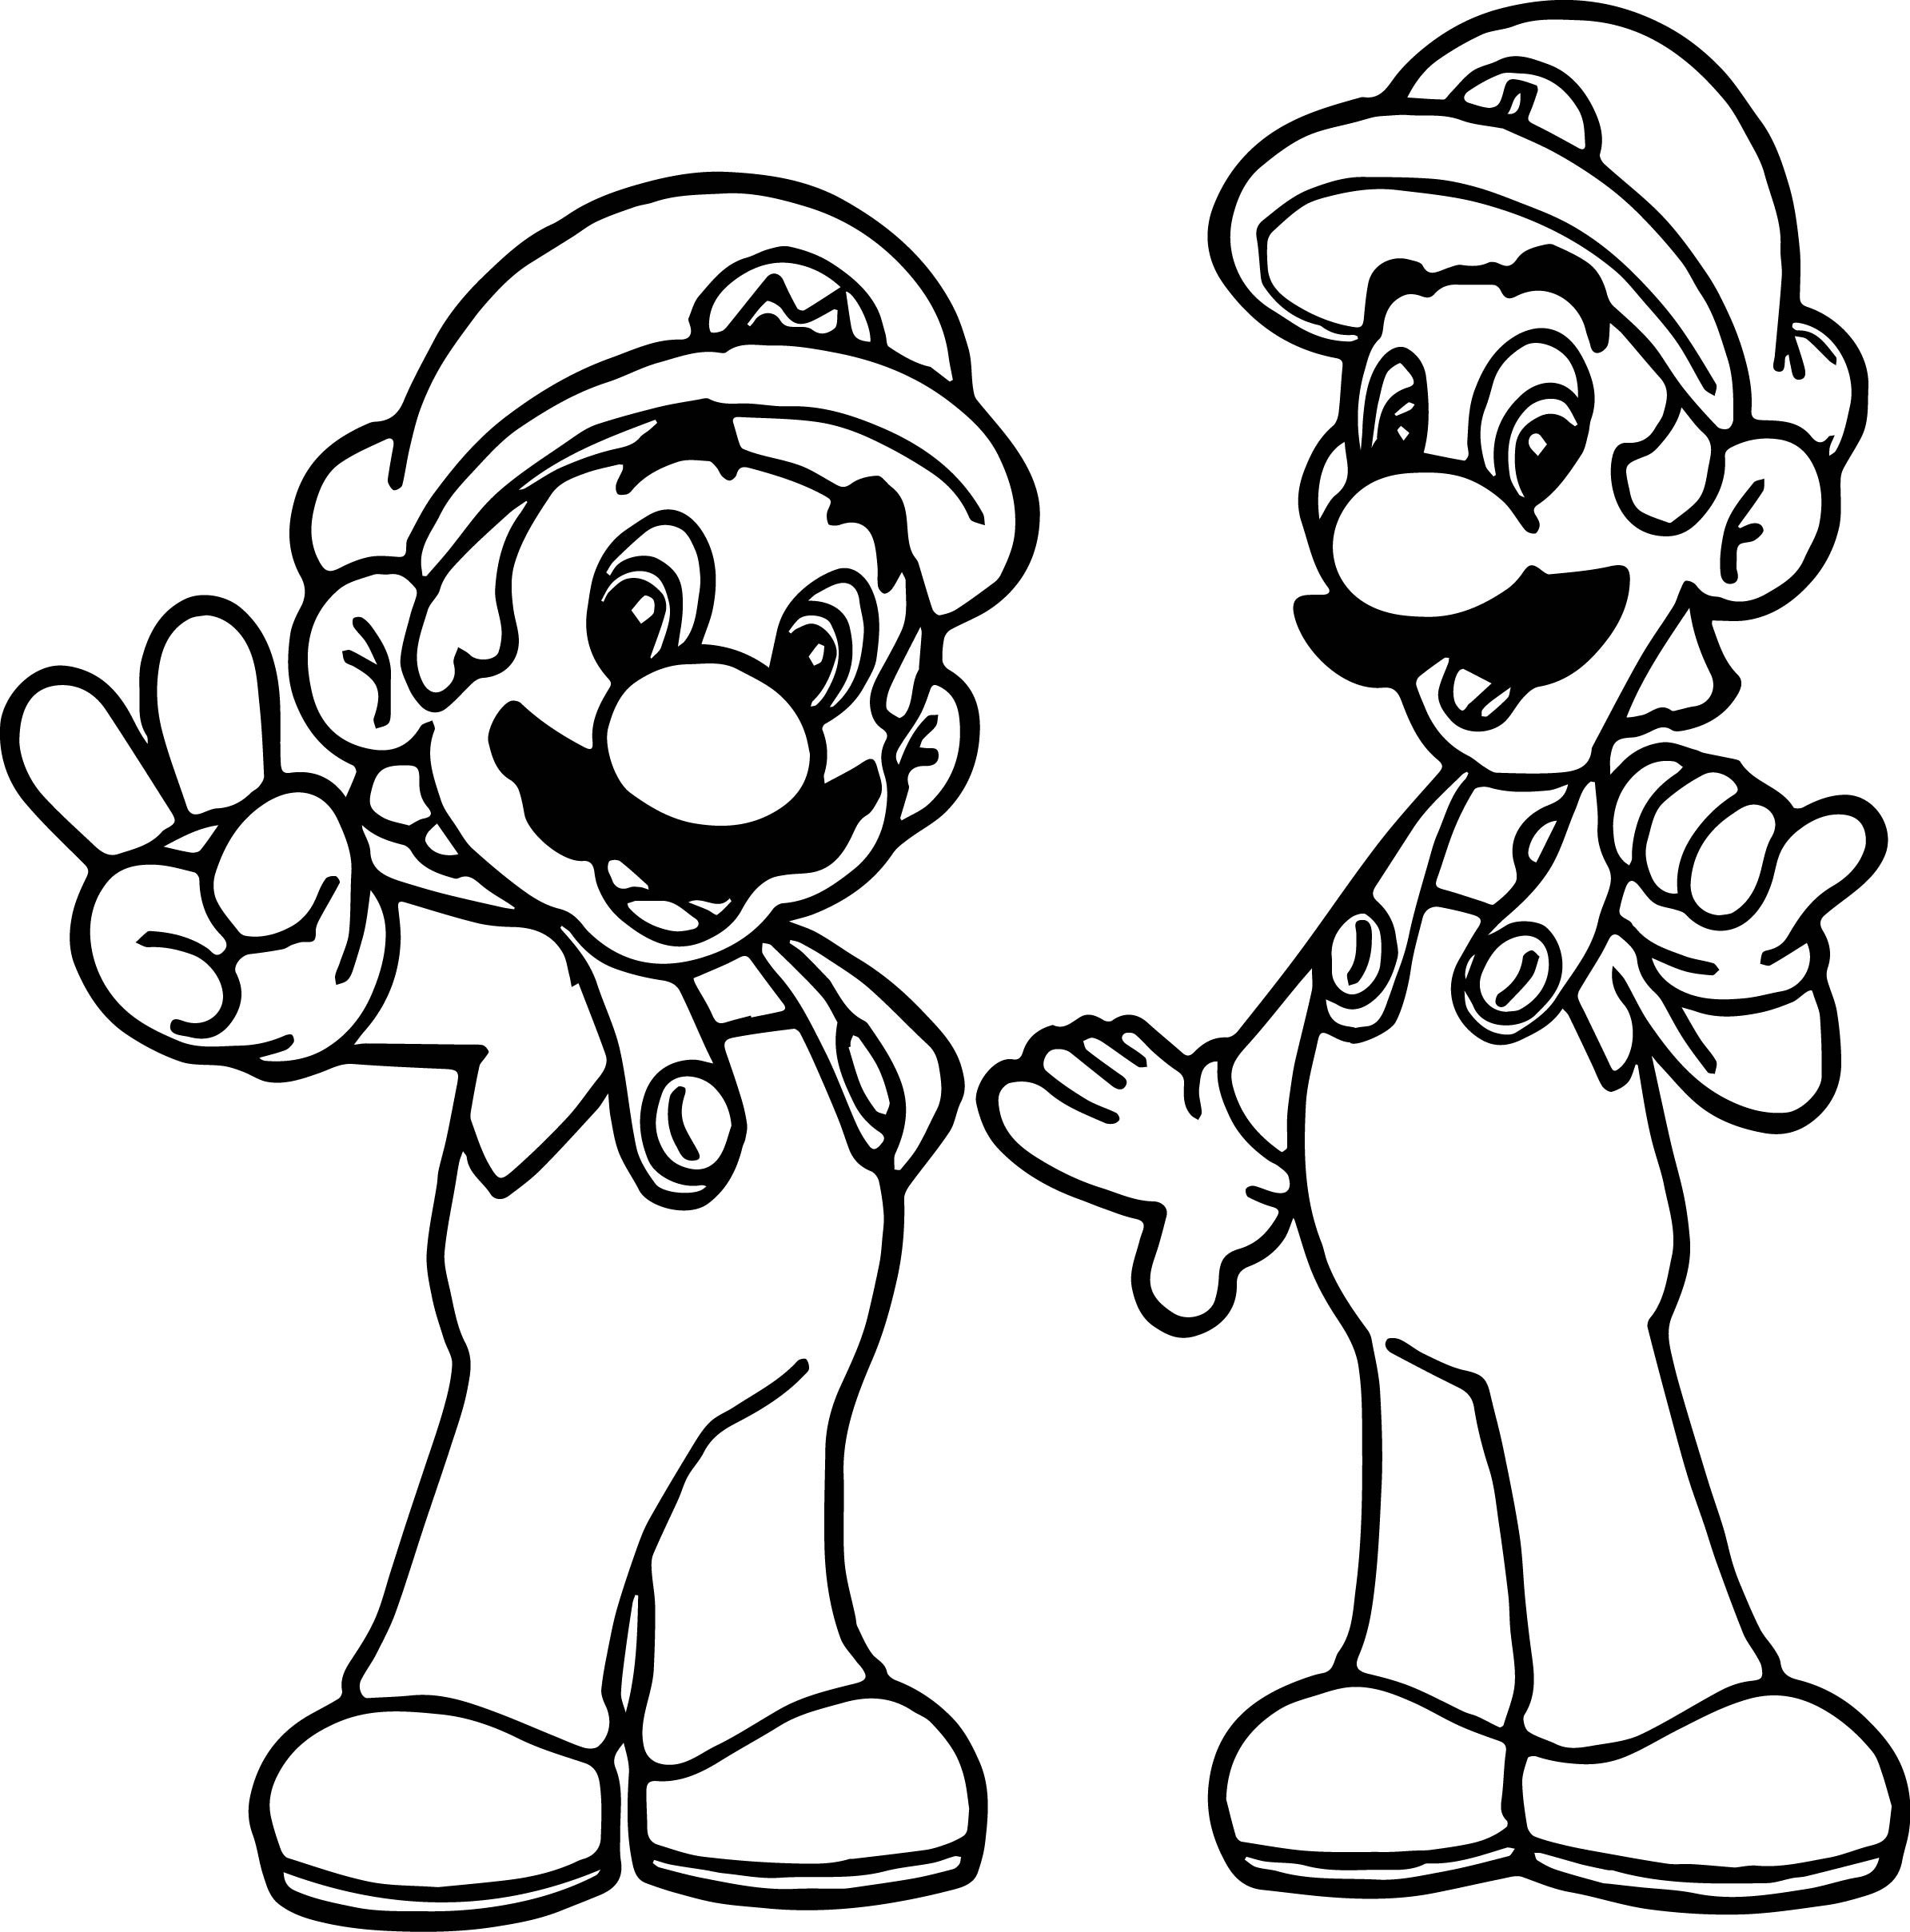 Luigi Coloring Pages Pdf to Print - Mario Luigi Coloring Pages